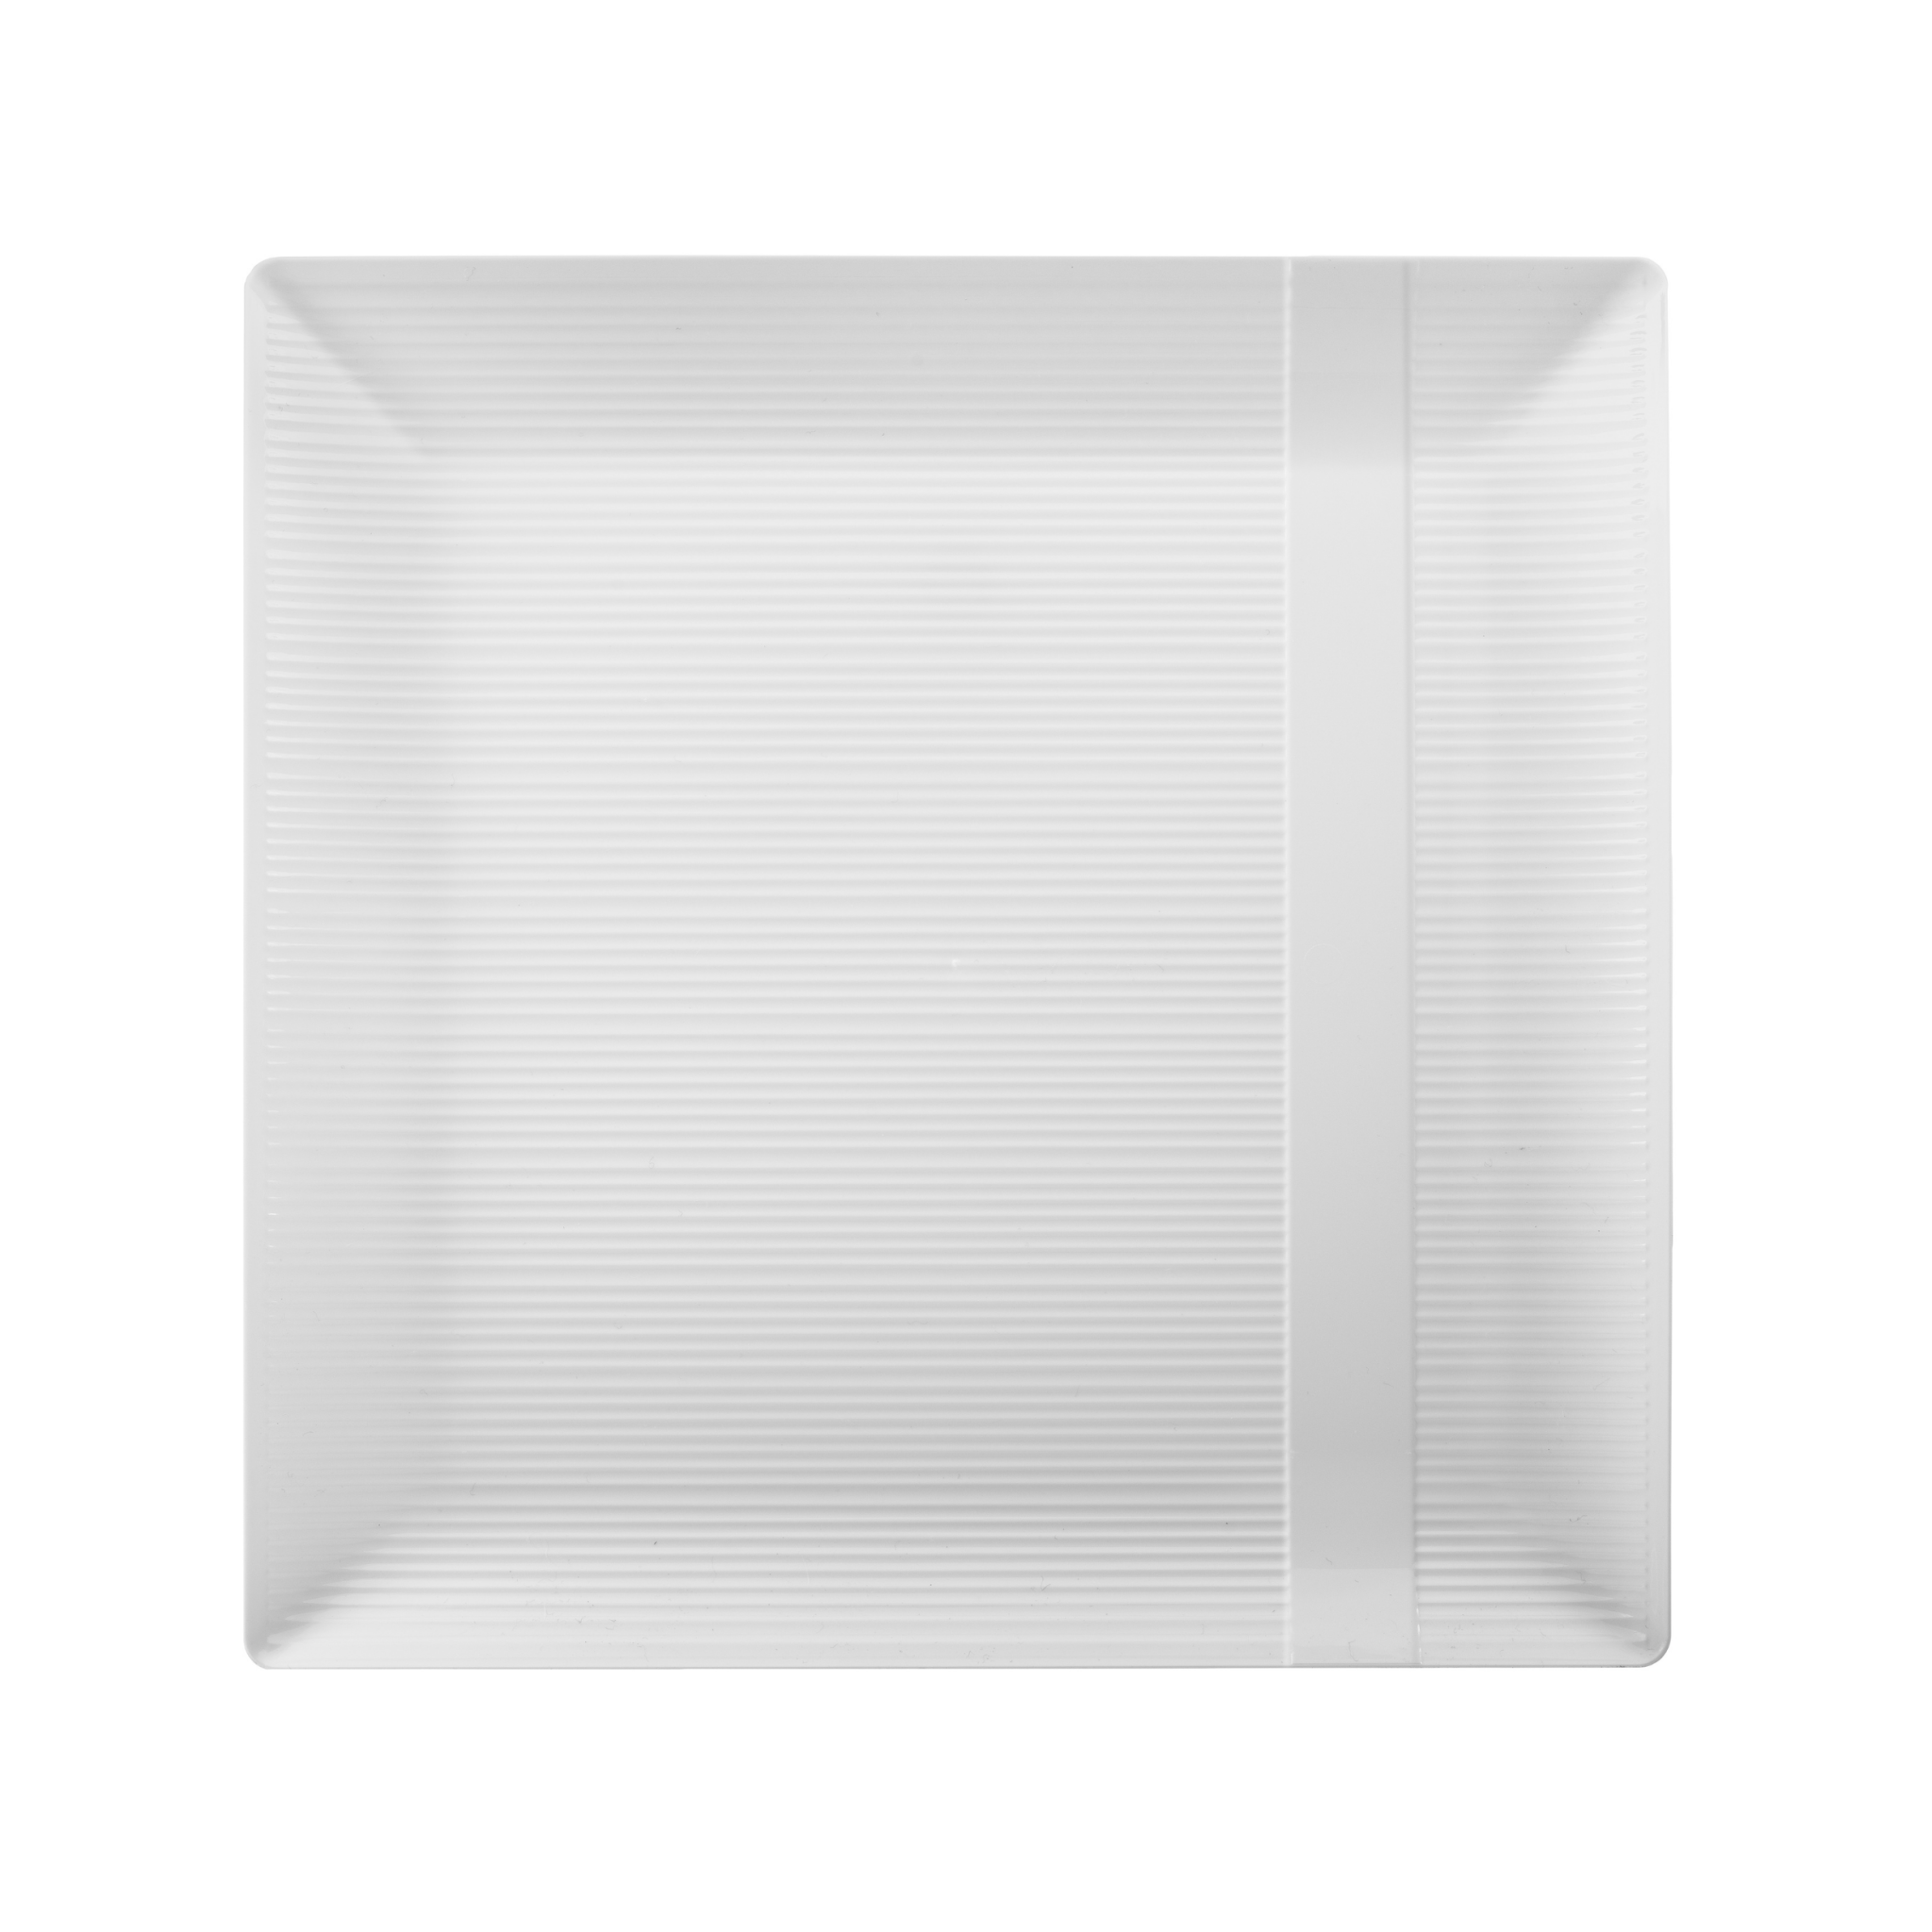 10.25" Zen Ridged White Square Plastic Plates (120 Count)